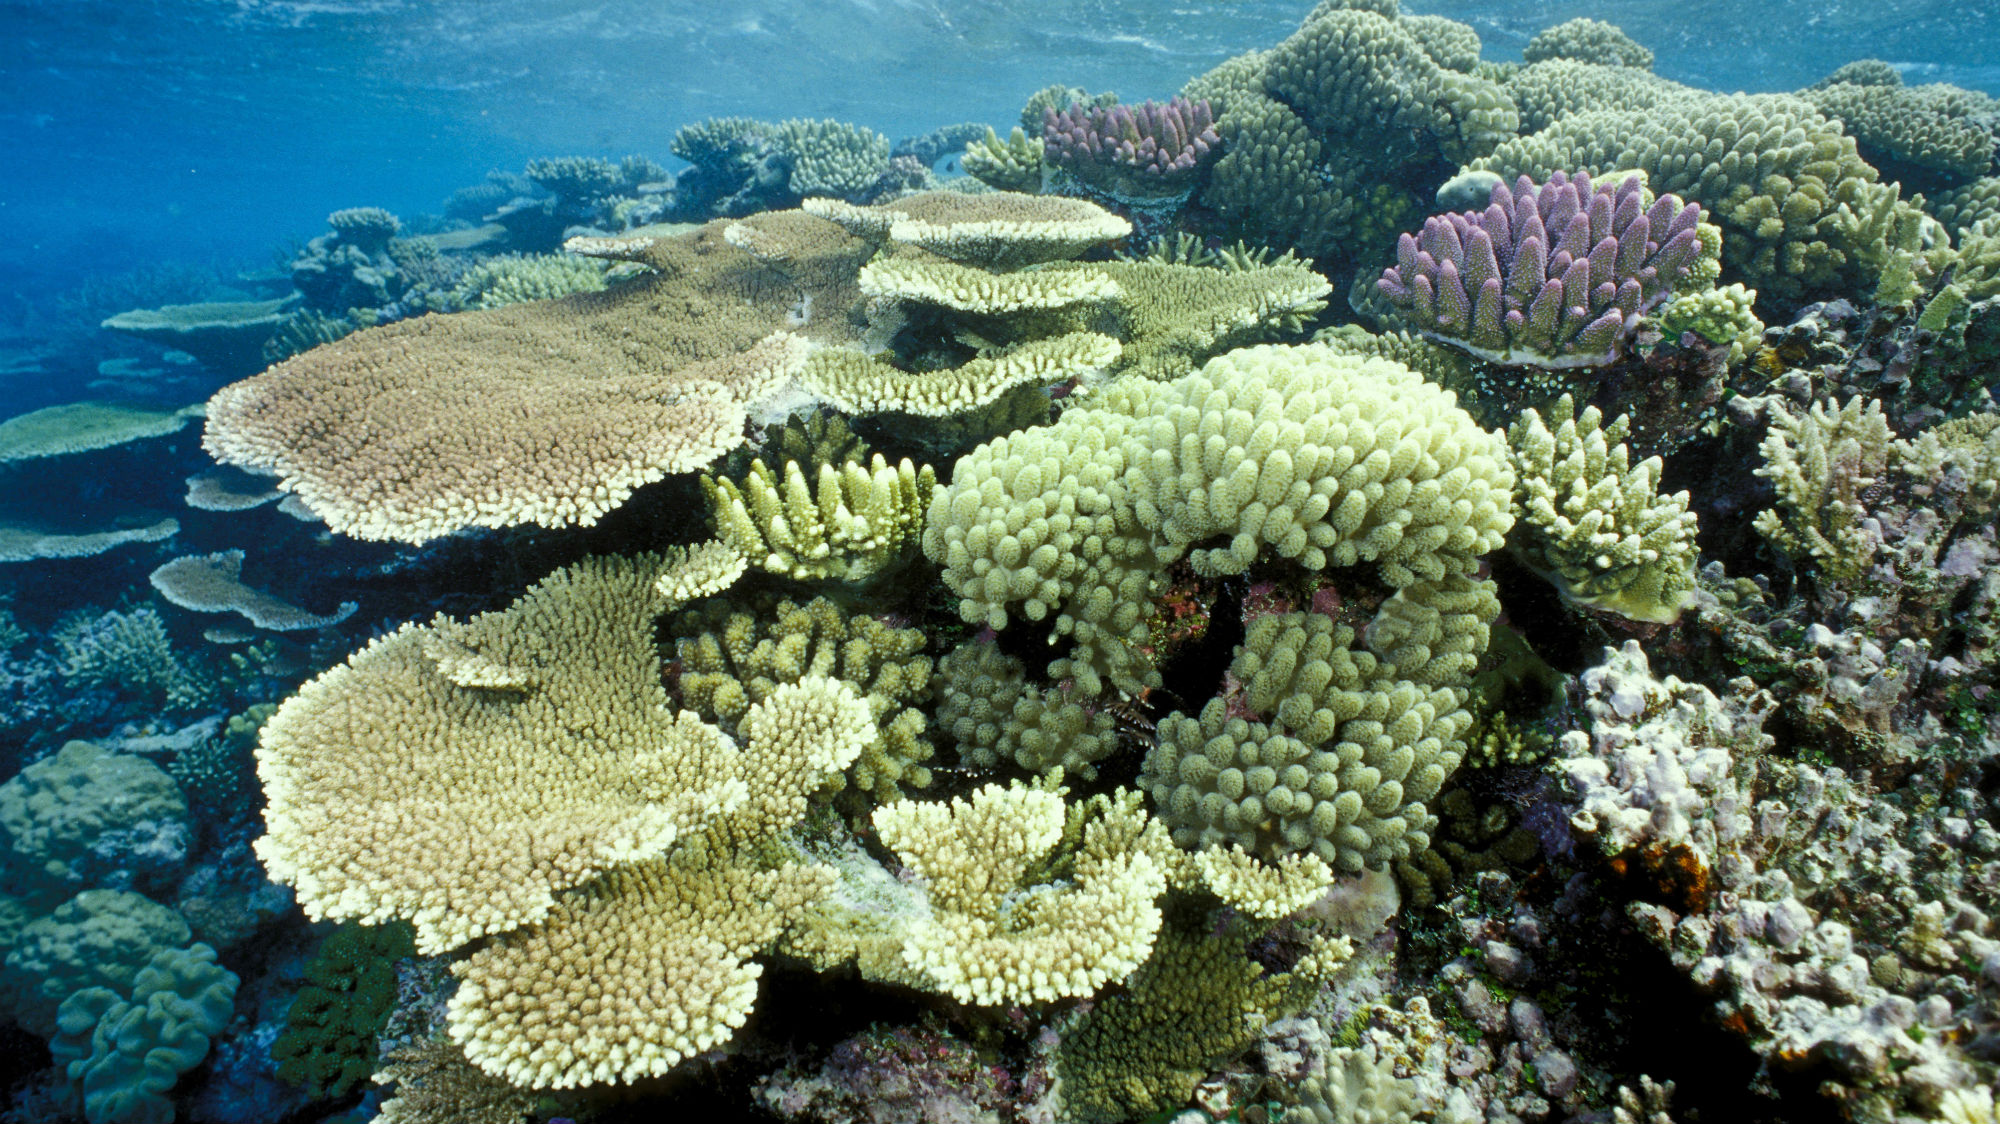 Coral h. Атлантический океан коралловый риф. Амазонский коралловый риф. Коралловые рифы в Амазонке. Бразилия рифы.